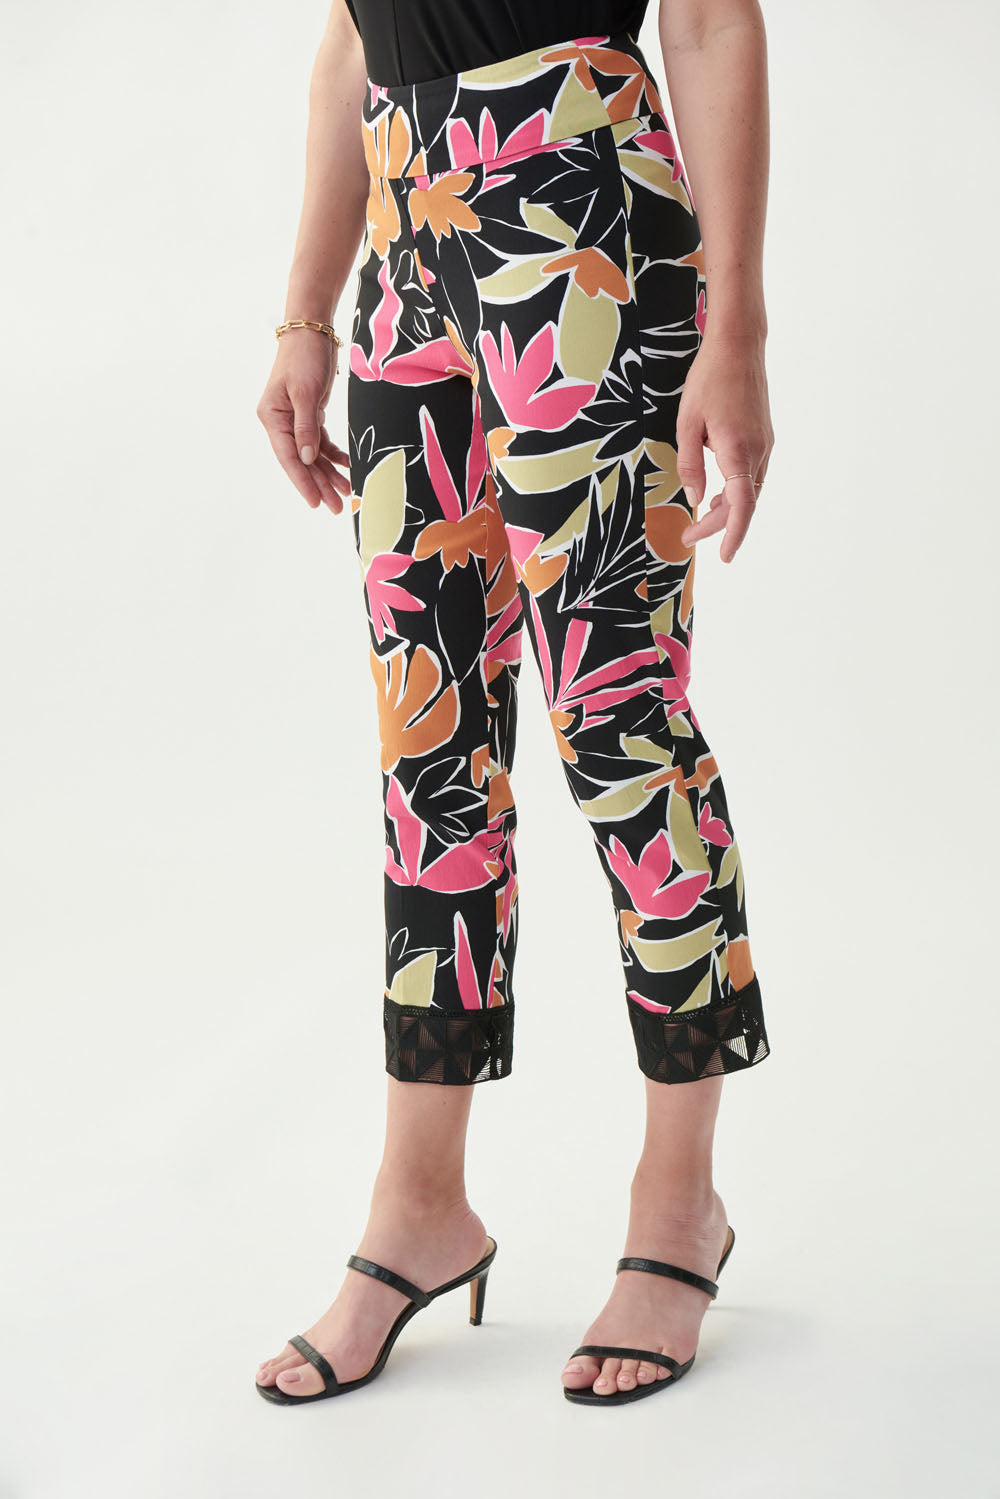 Joseph Ribkoff Black-Multi Floral Print Pants Style 221319